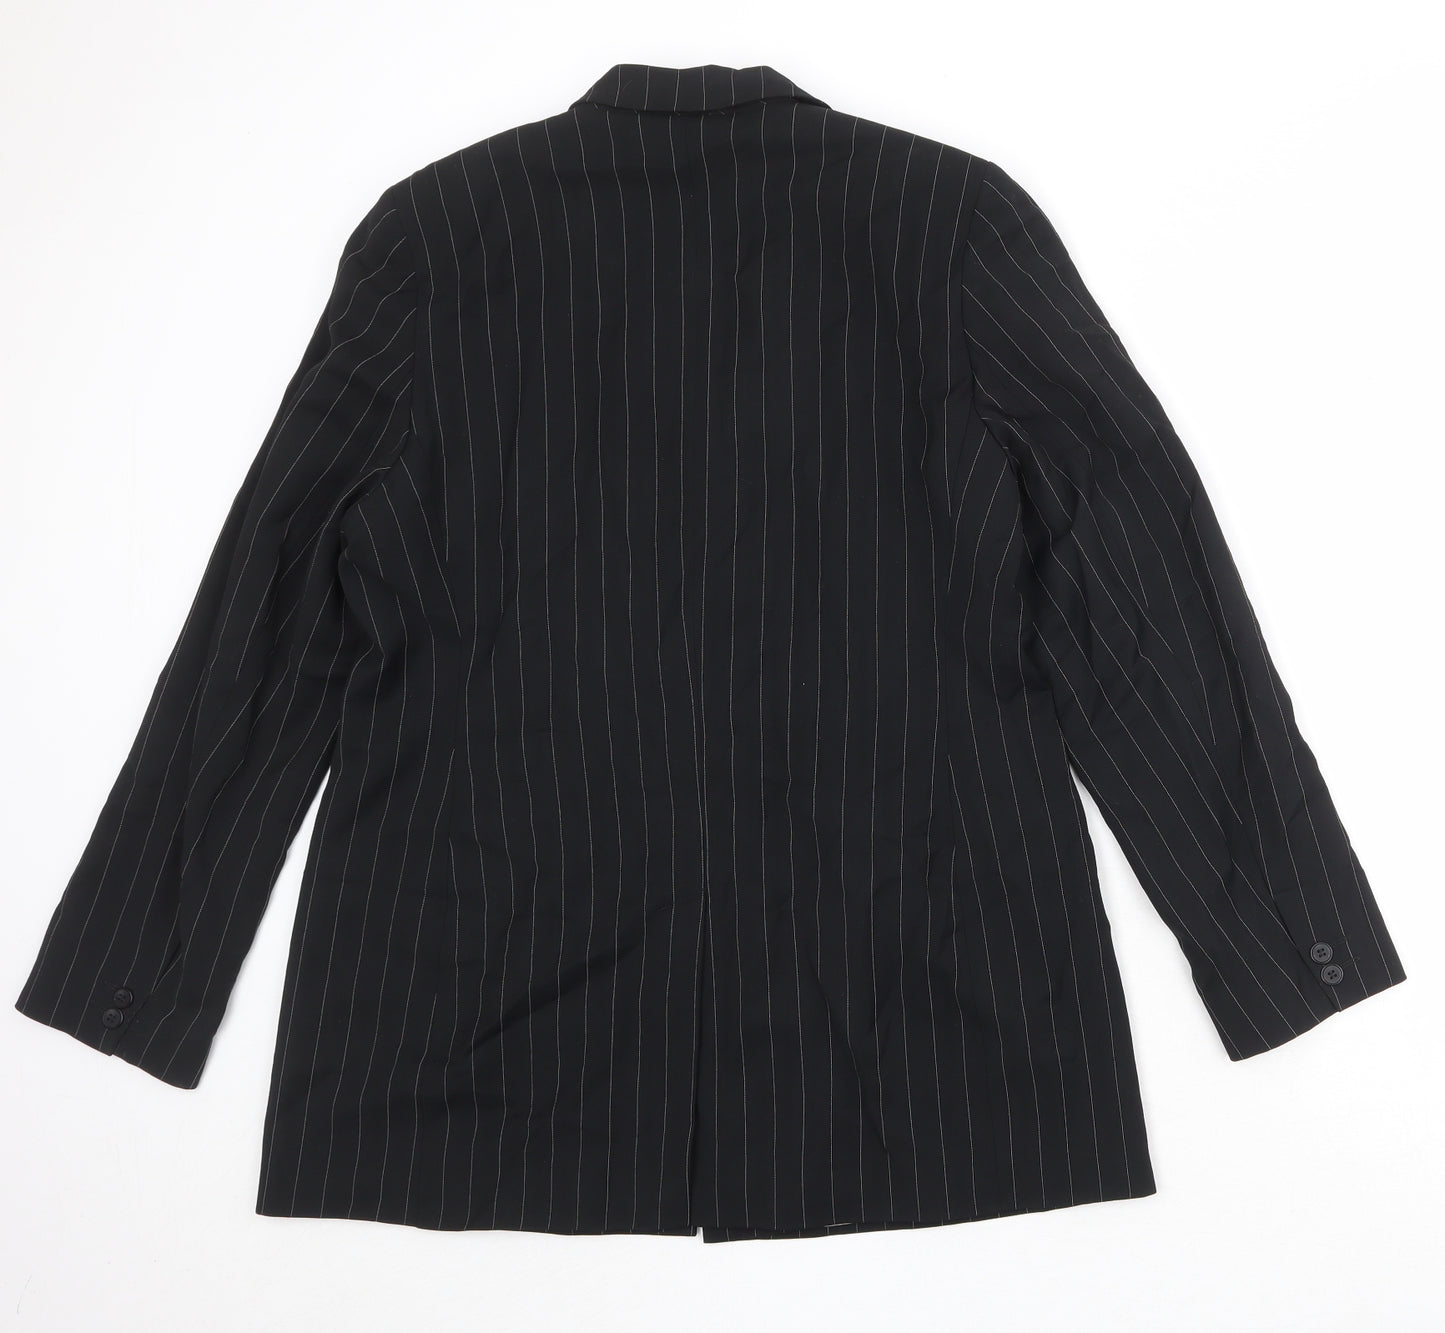 Laura Ashley Womens Black Striped Wool Jacket Suit Jacket Size 16